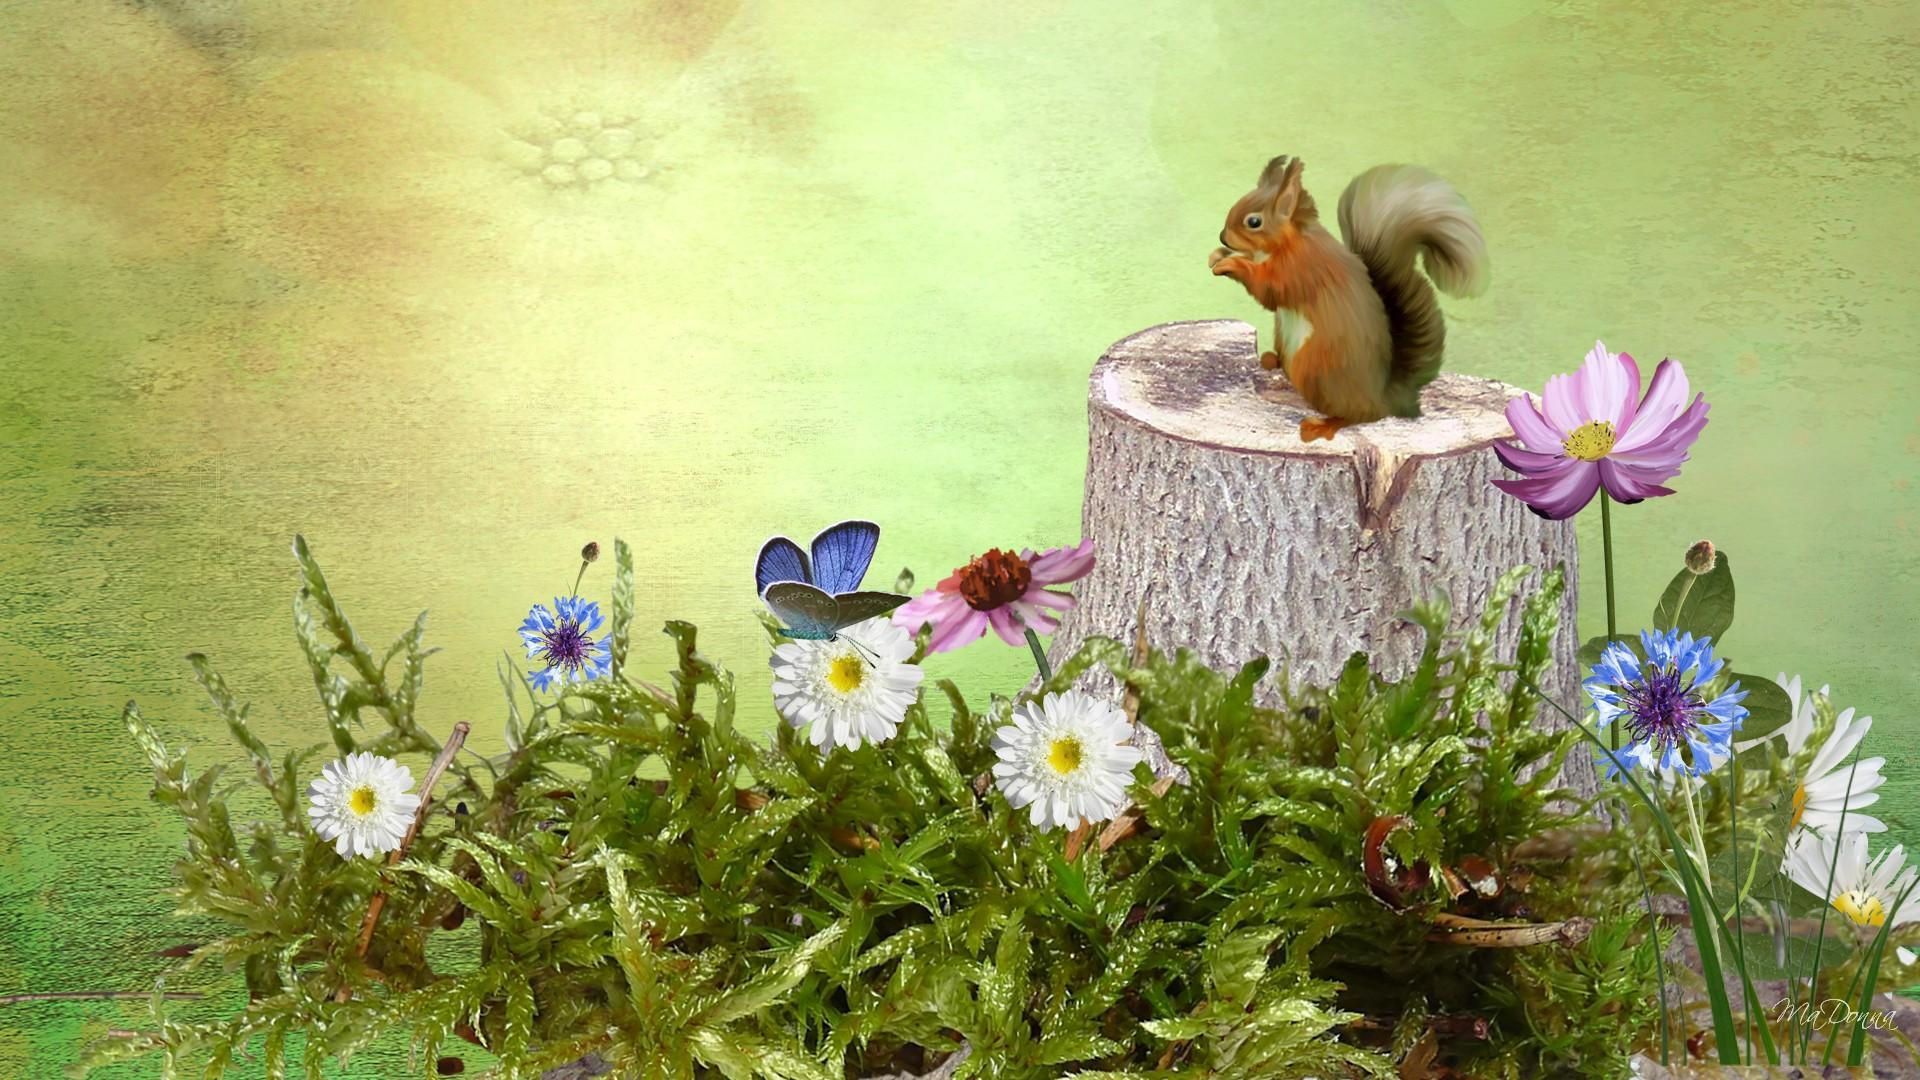 Animal Squirrel Wallpaper. Wallpaper background, Squirrel, Background image